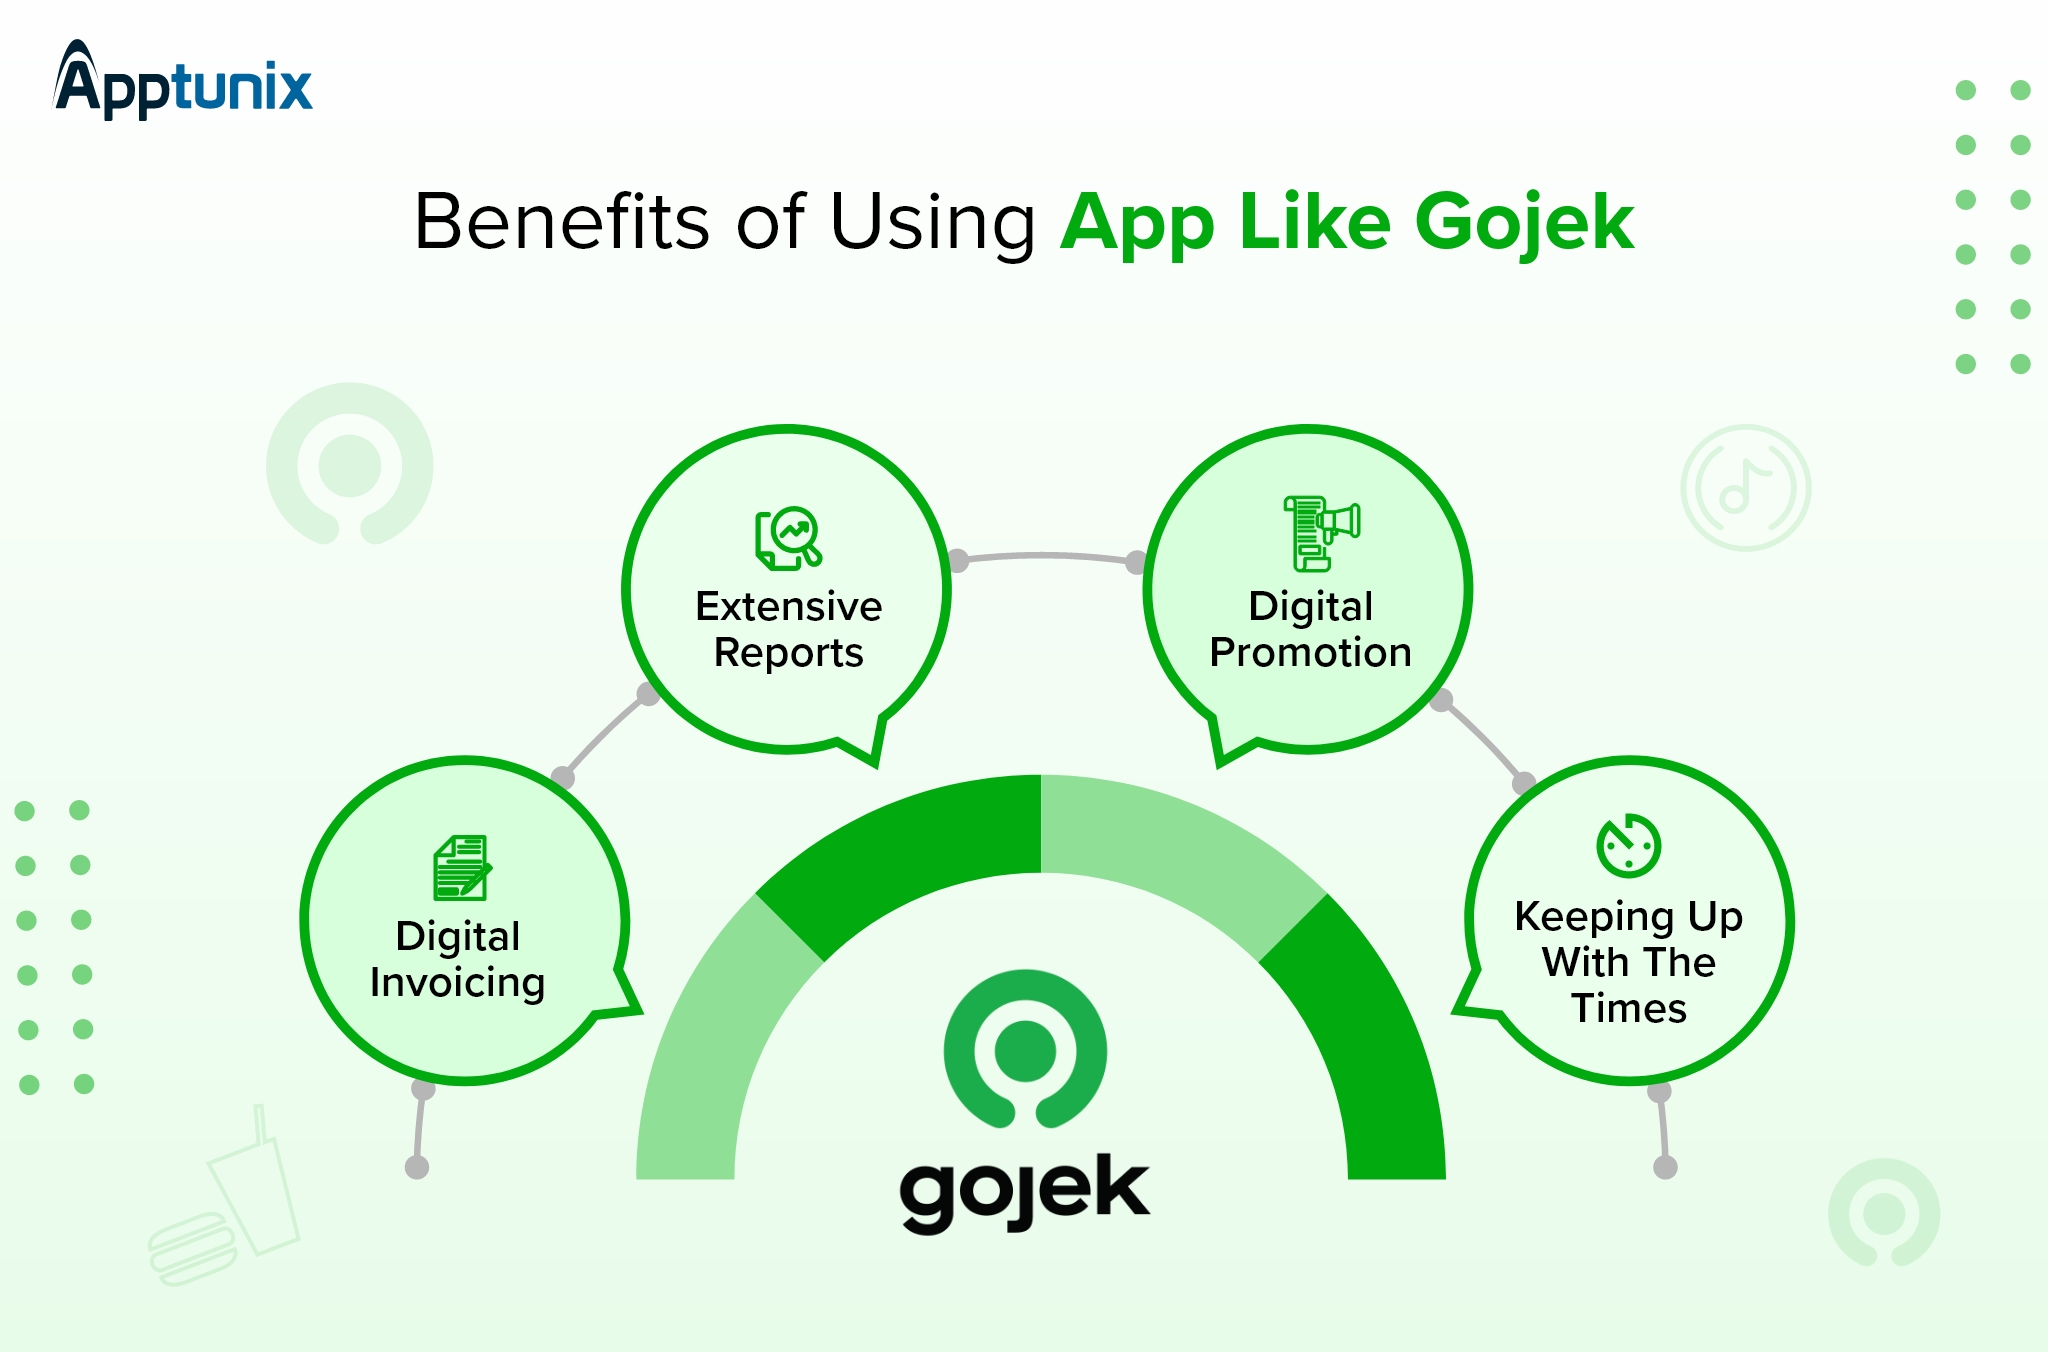 Benefits of using app like gojek